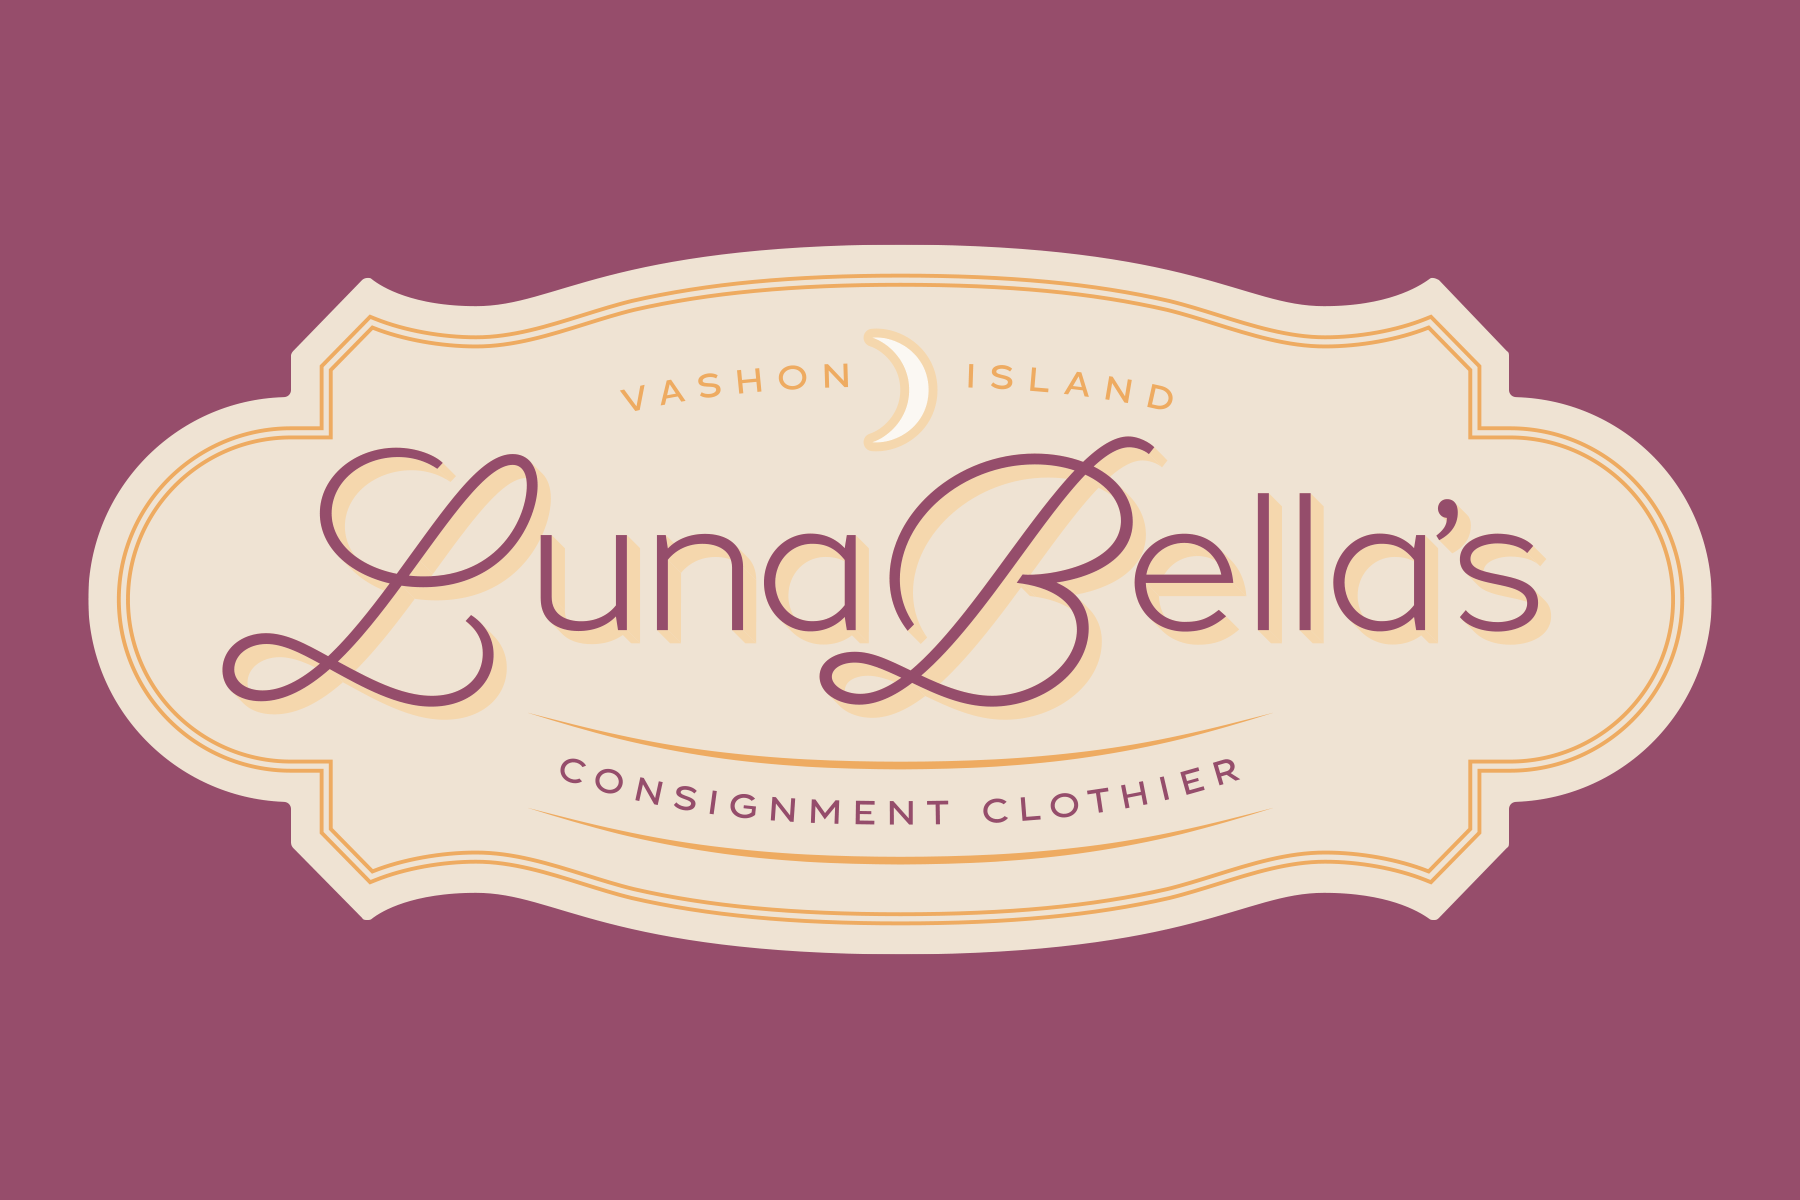 Luna Bella's logo